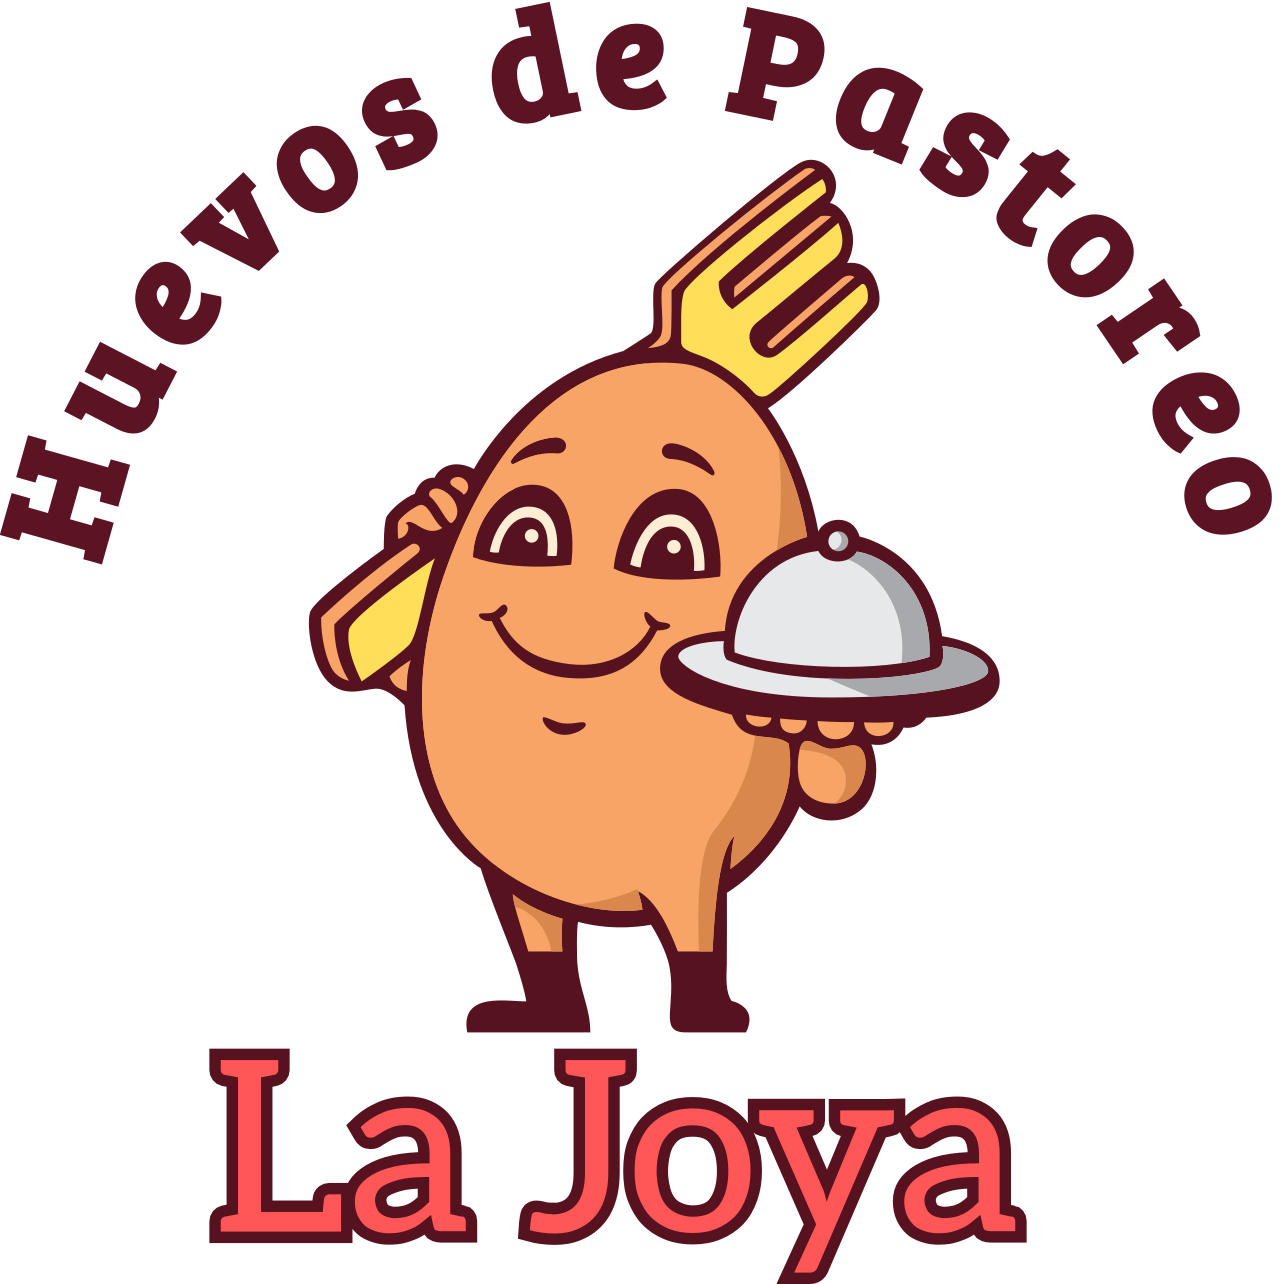 Huevos de Pastoreo 's web page